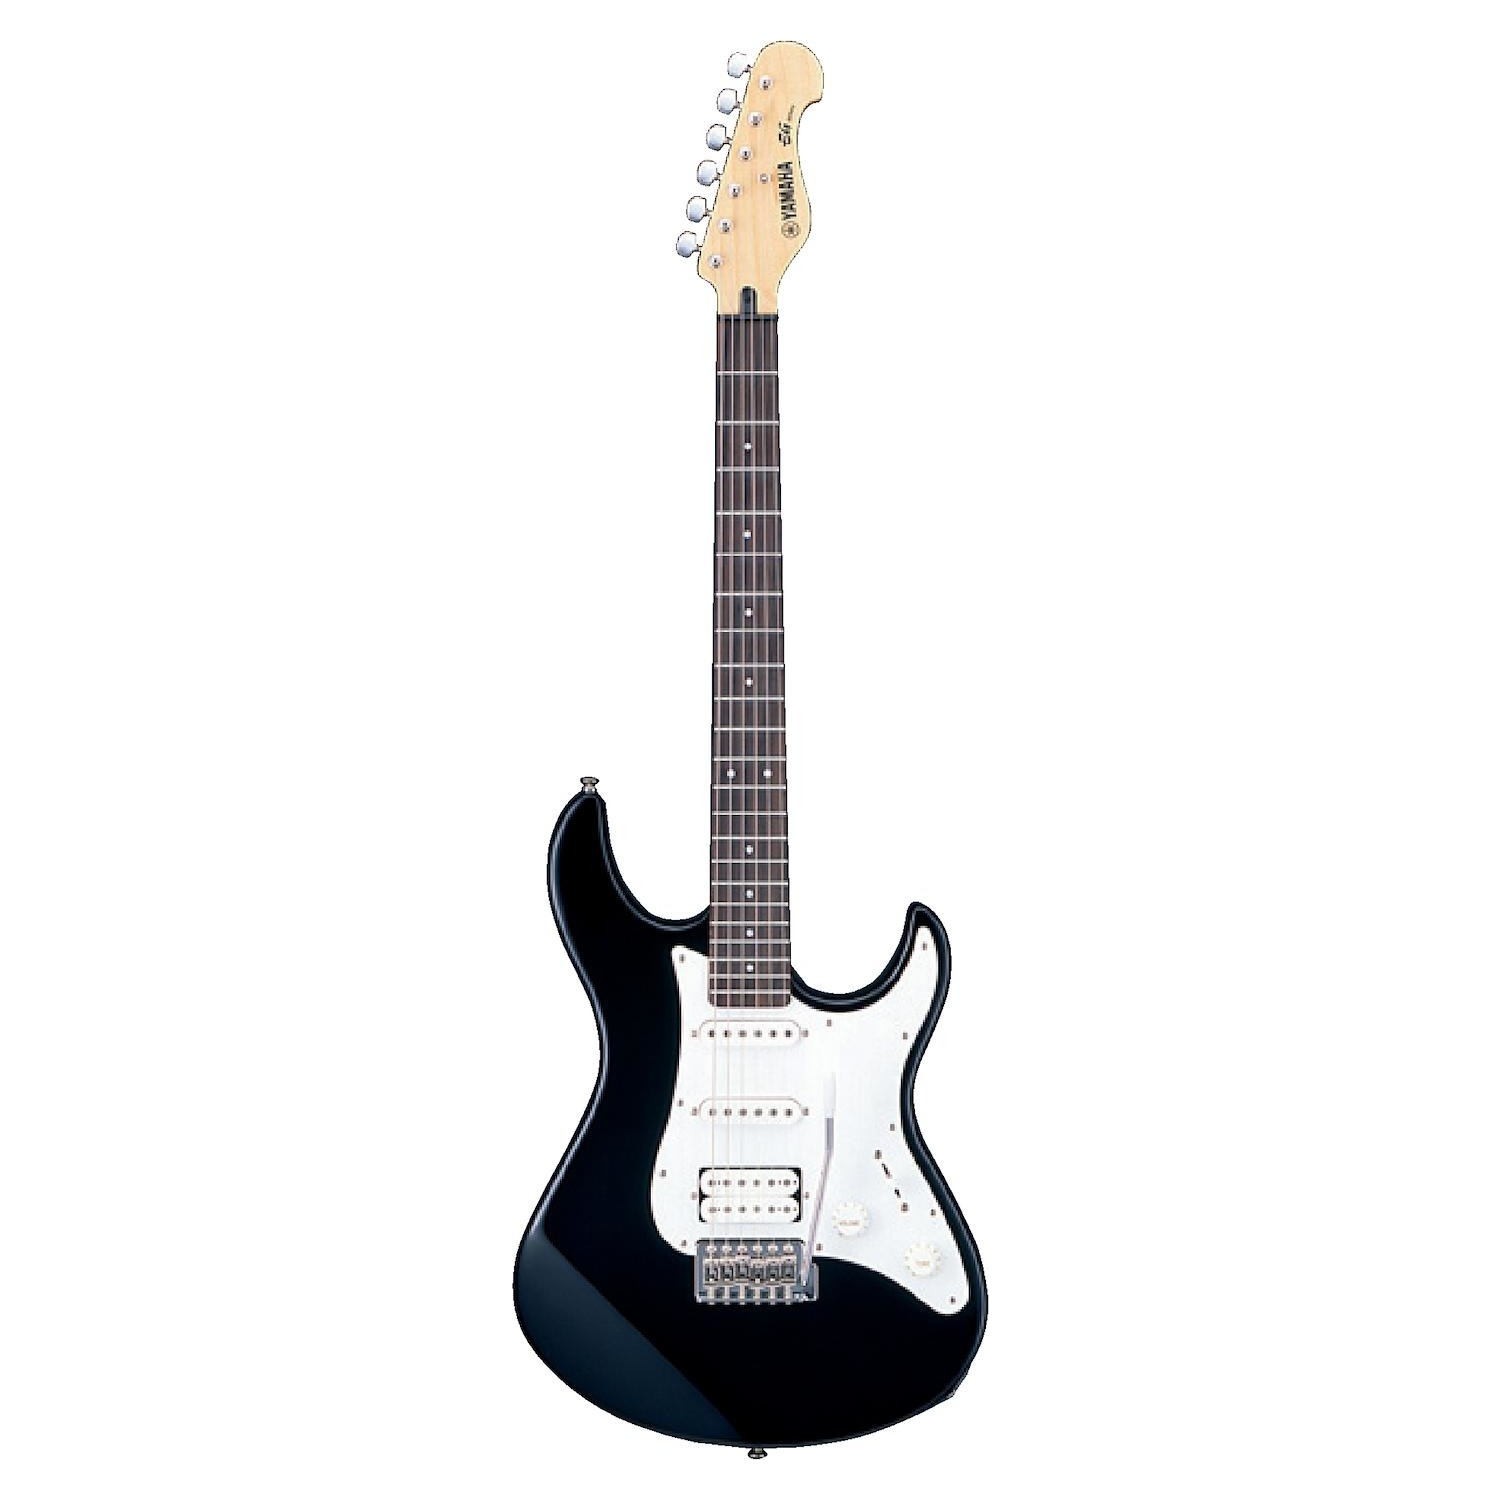 Immagine per Kit chitarra elettrica Yamaha EG112GPIIHII da DIMOStore